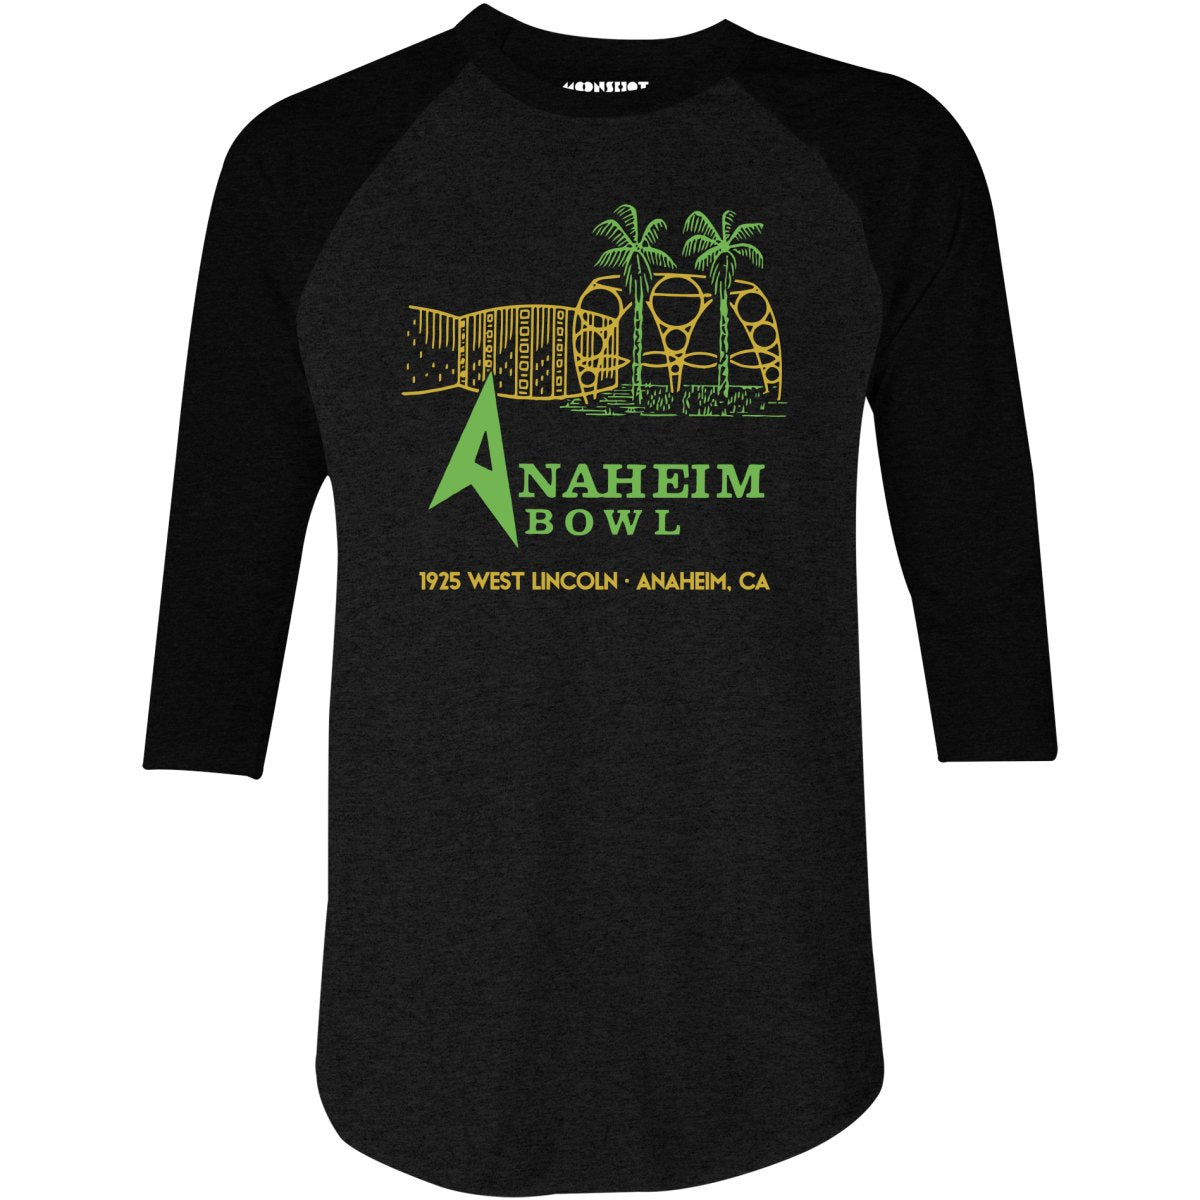 Anaheim Bowl - Anaheim, CA - Vintage Bowling Alley - 3/4 Sleeve Raglan T-Shirt